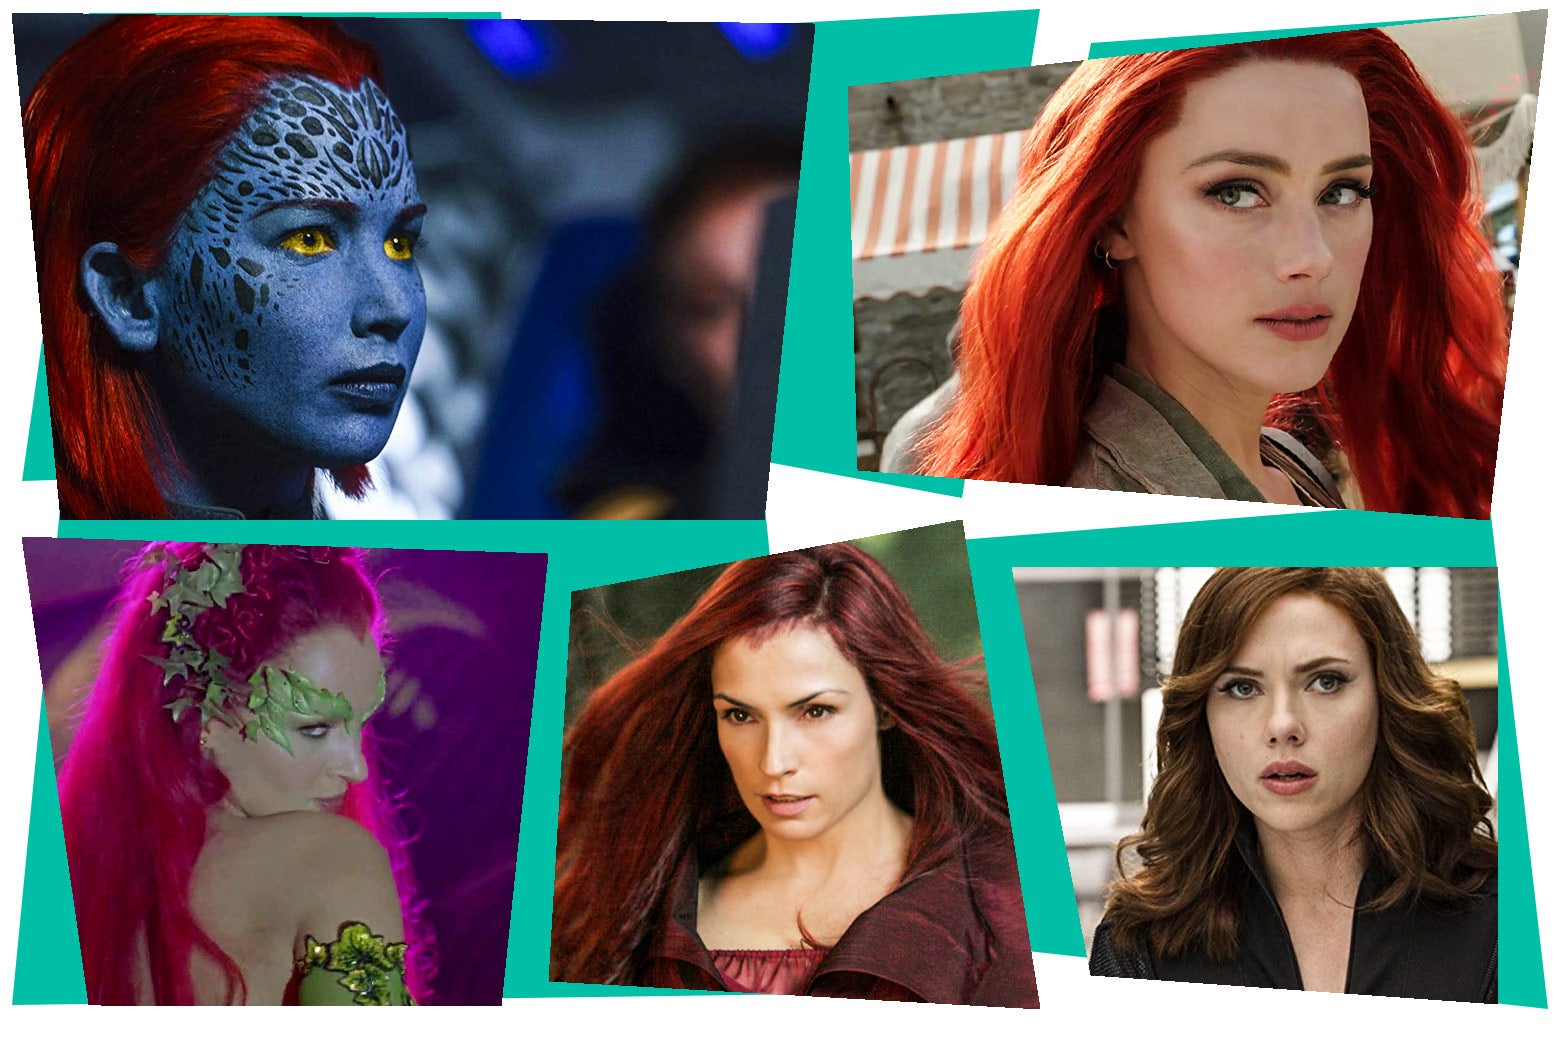 Famke Janssen as Jean Grey, Jennifer Lawrence as Mystique in the X-Men movies, Amber Heard as Mera in Aquaman, Uma Thurman as Poison Ivy in Batman and Robin, and Scarlett Johansson as Black Widow. 